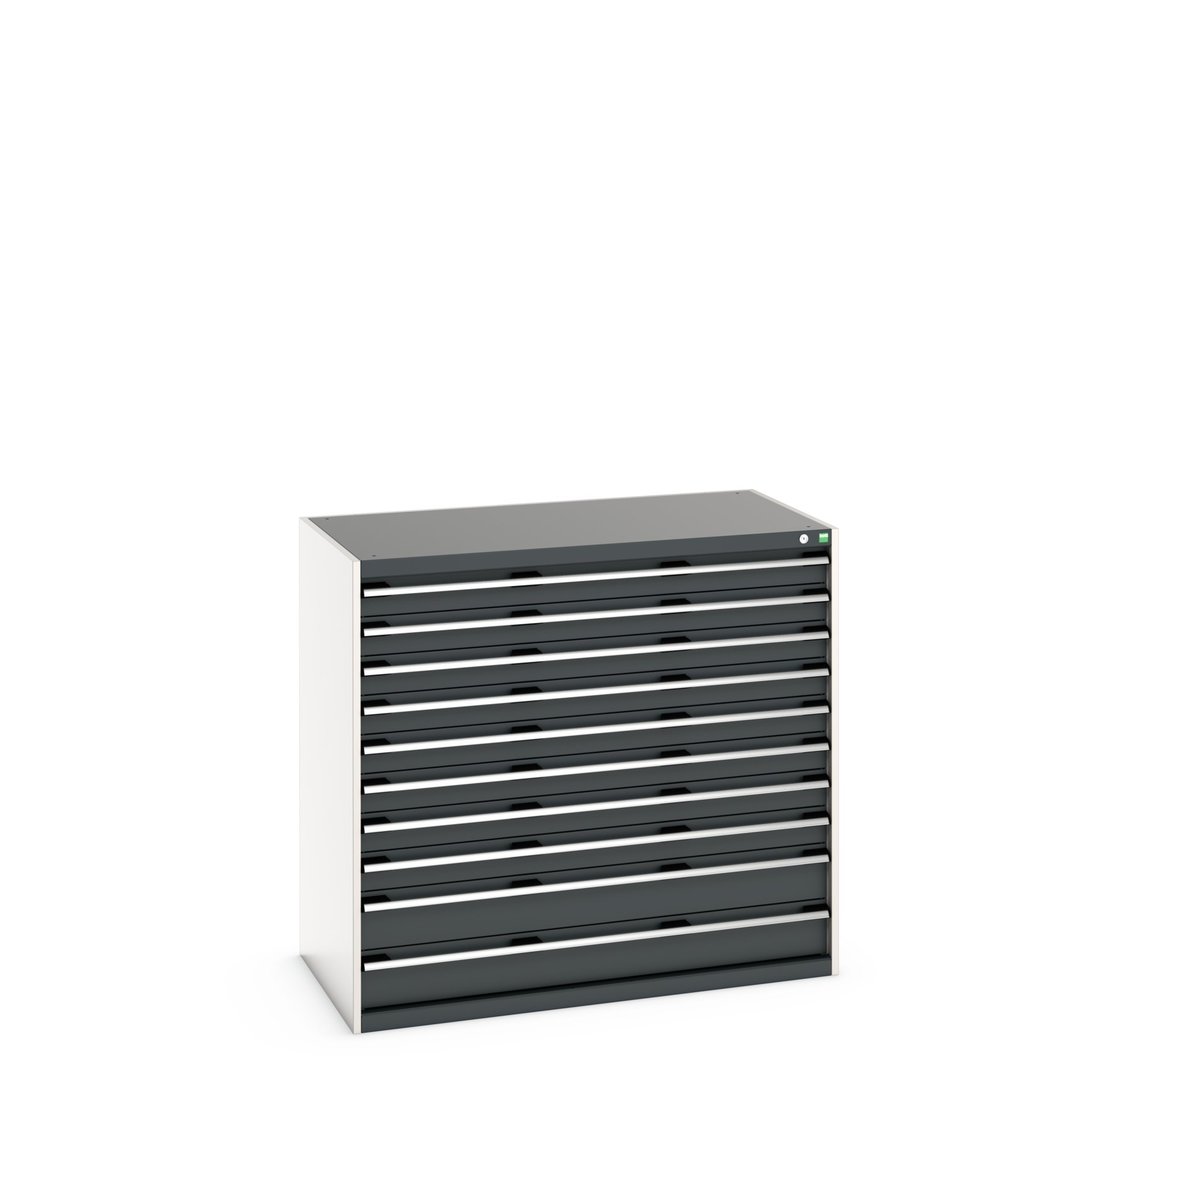 40030025. - cubio drawer cabinet